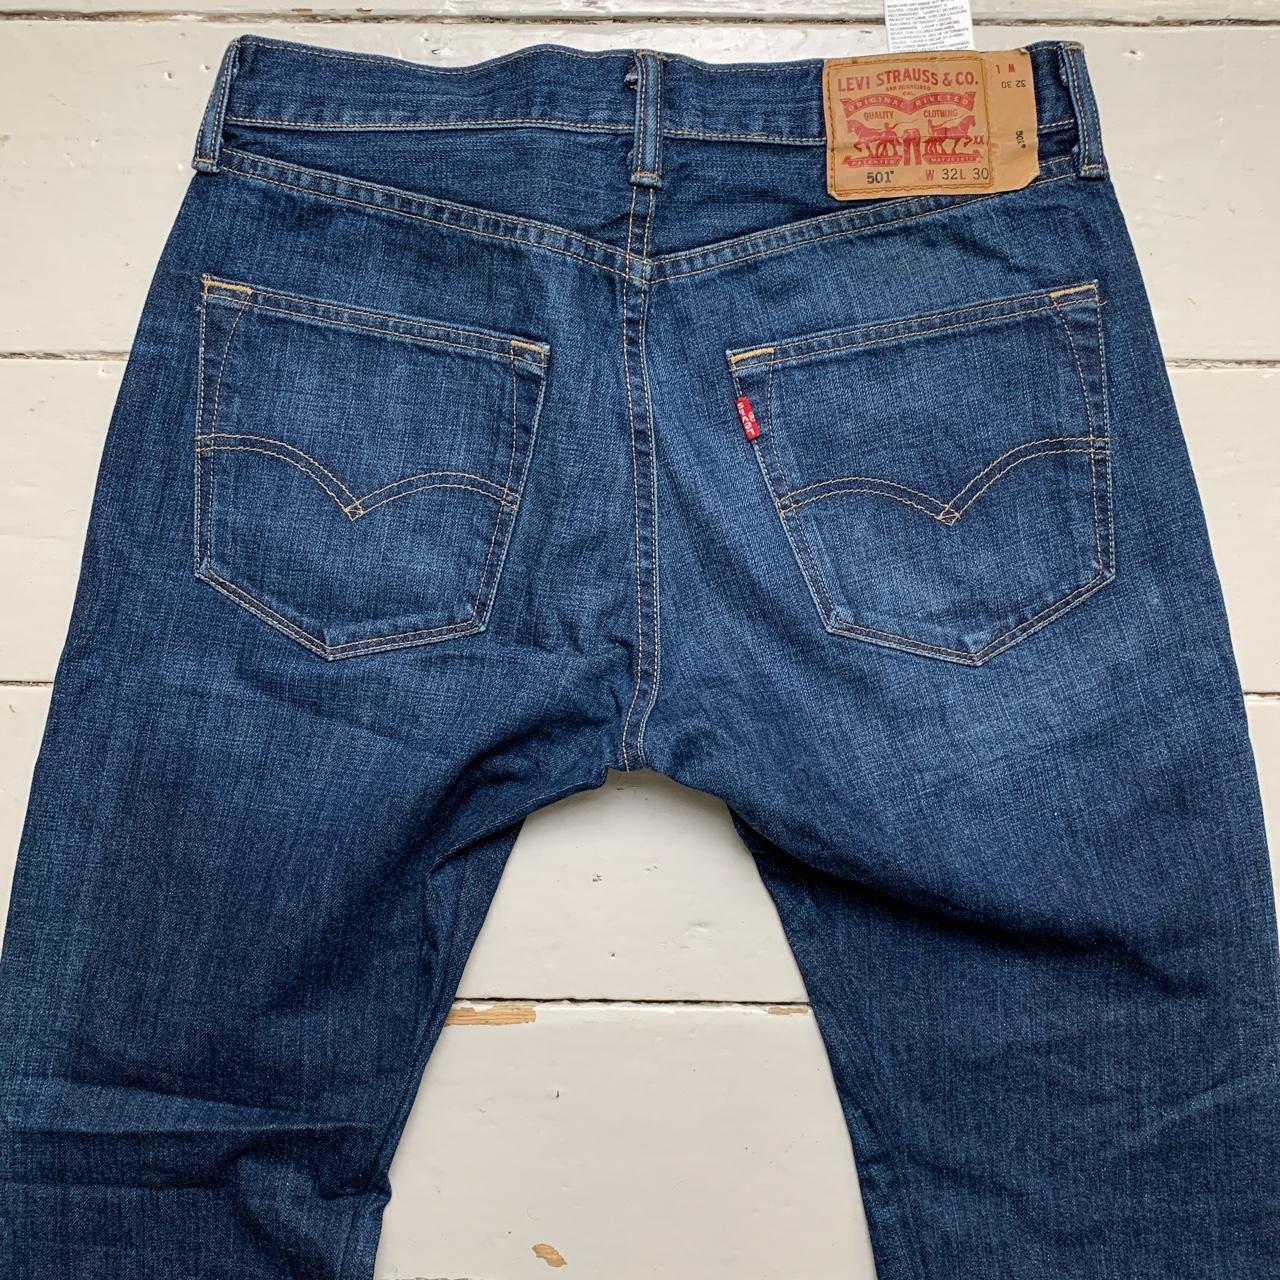 Levis 501 Navy Jeans